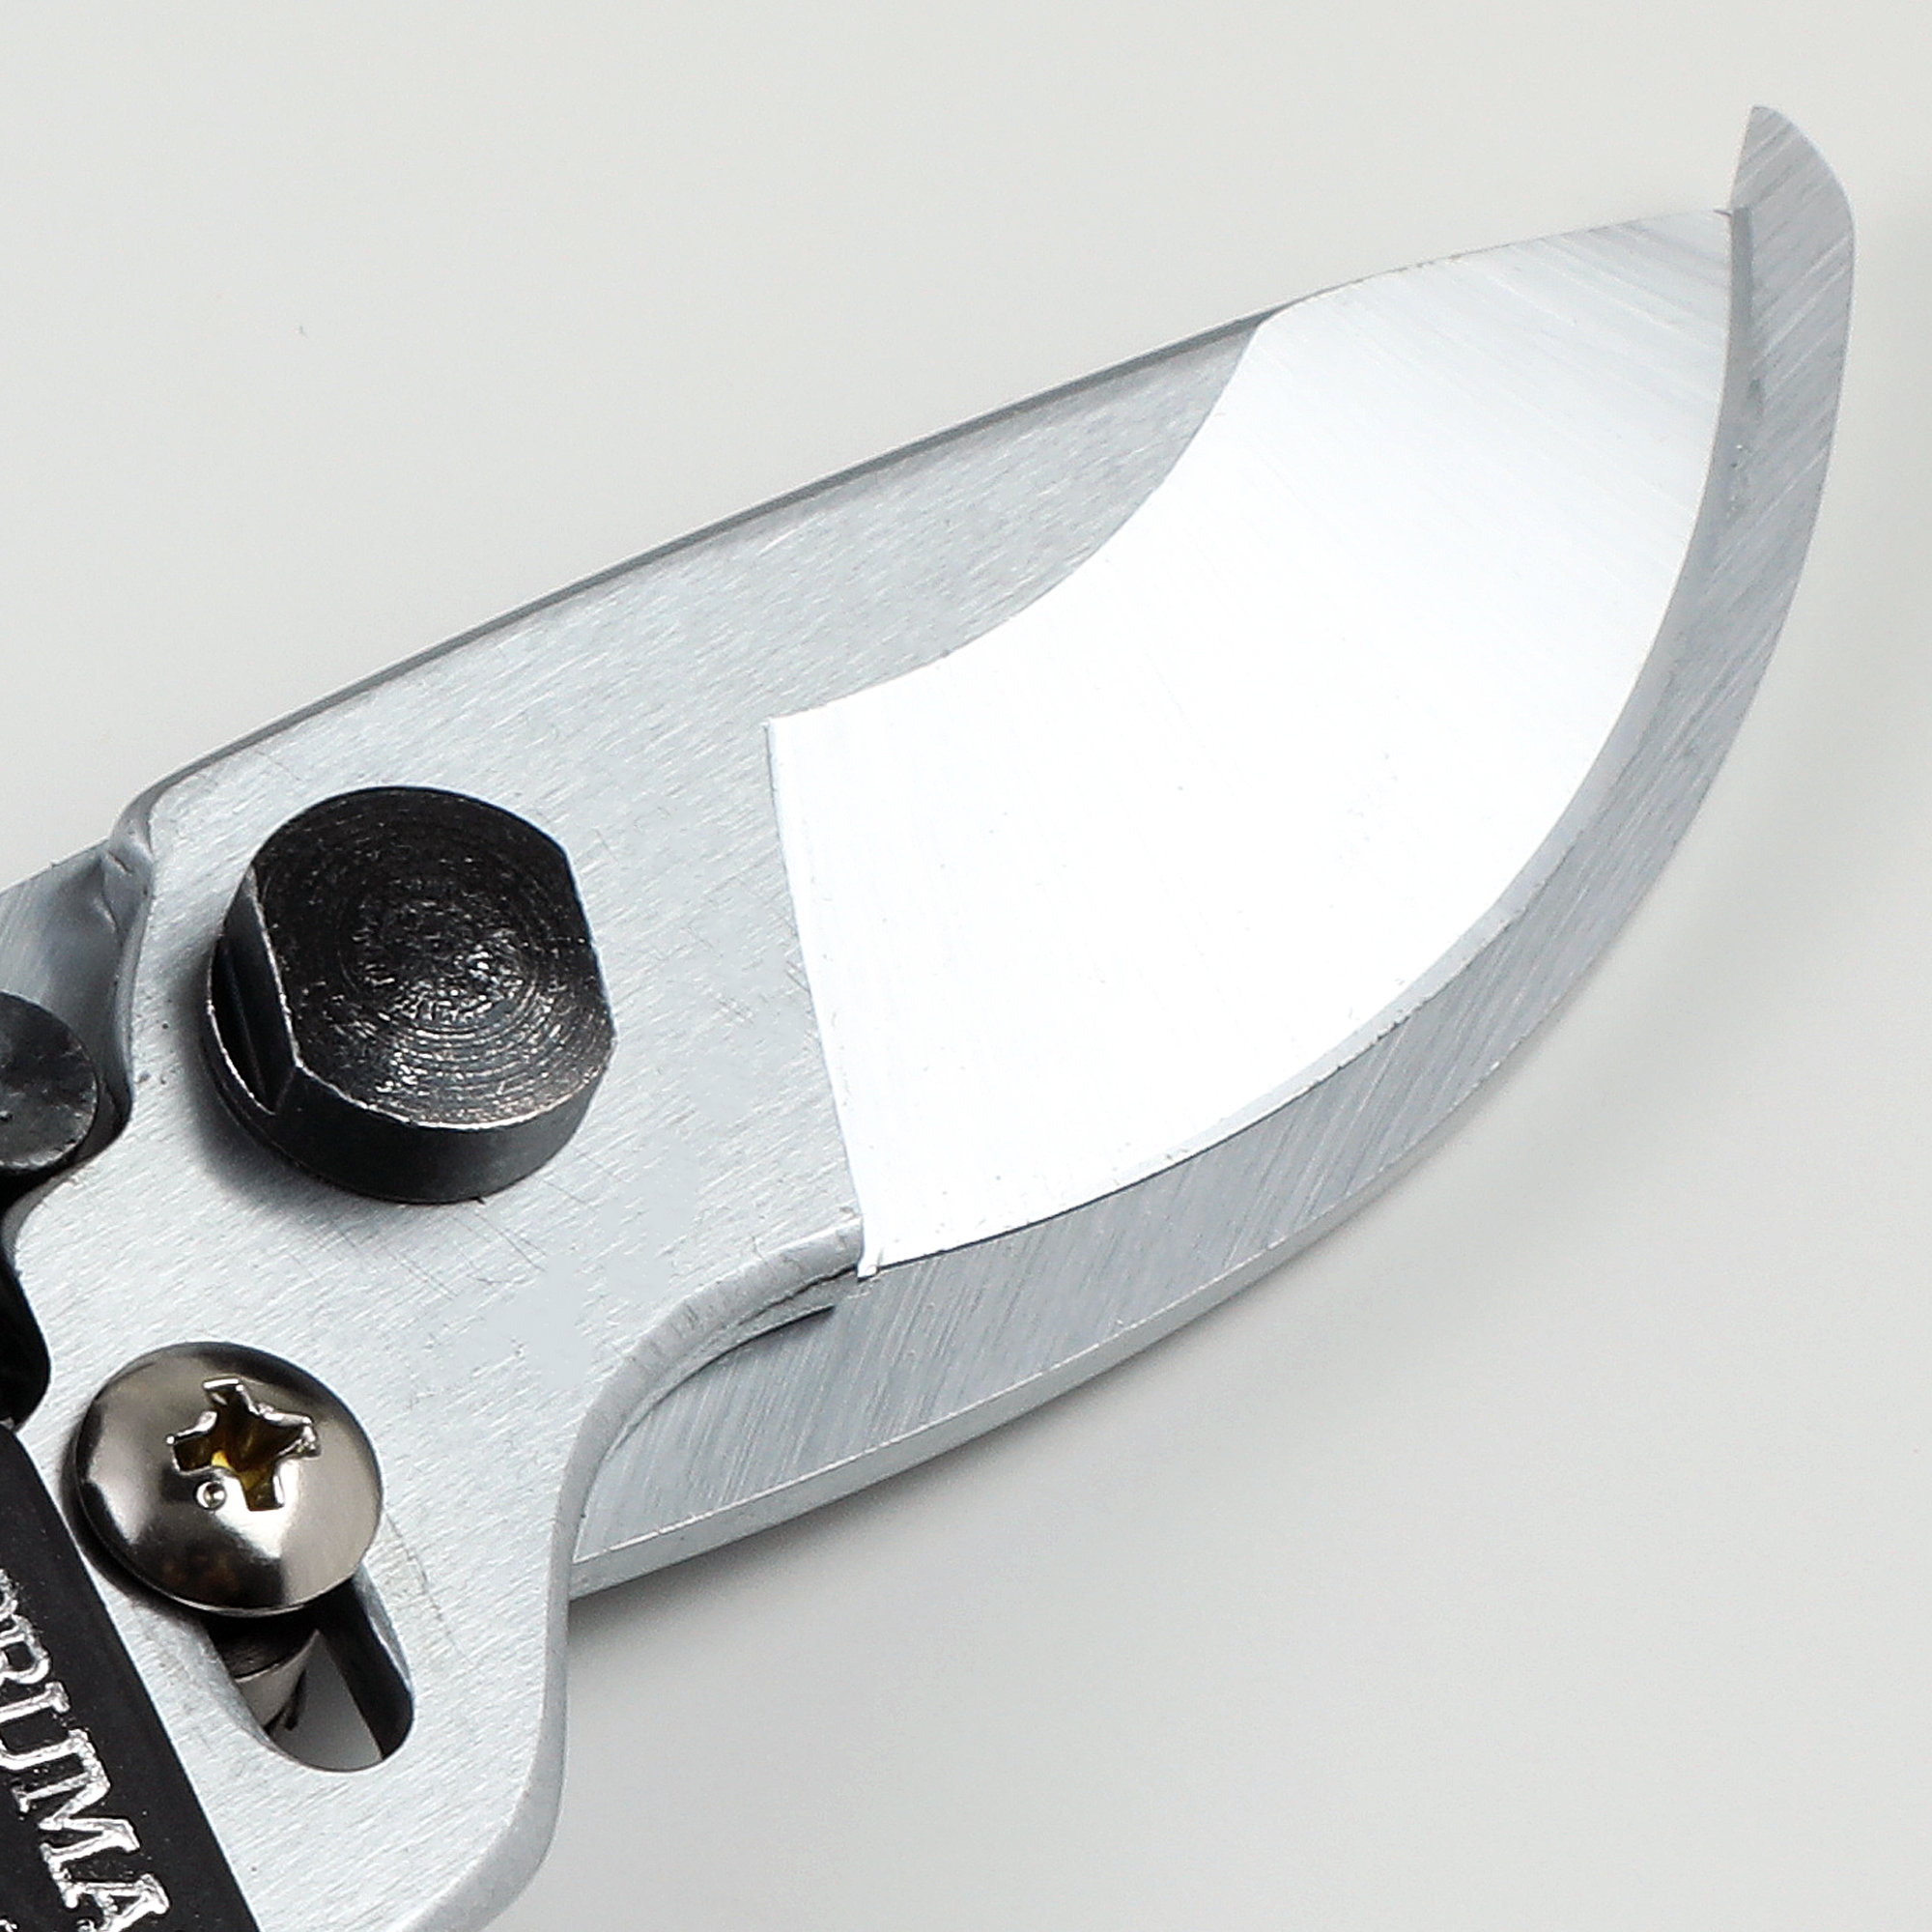 Wide blade Japanese Hand-made slicing shears – Master Shear Sharpener